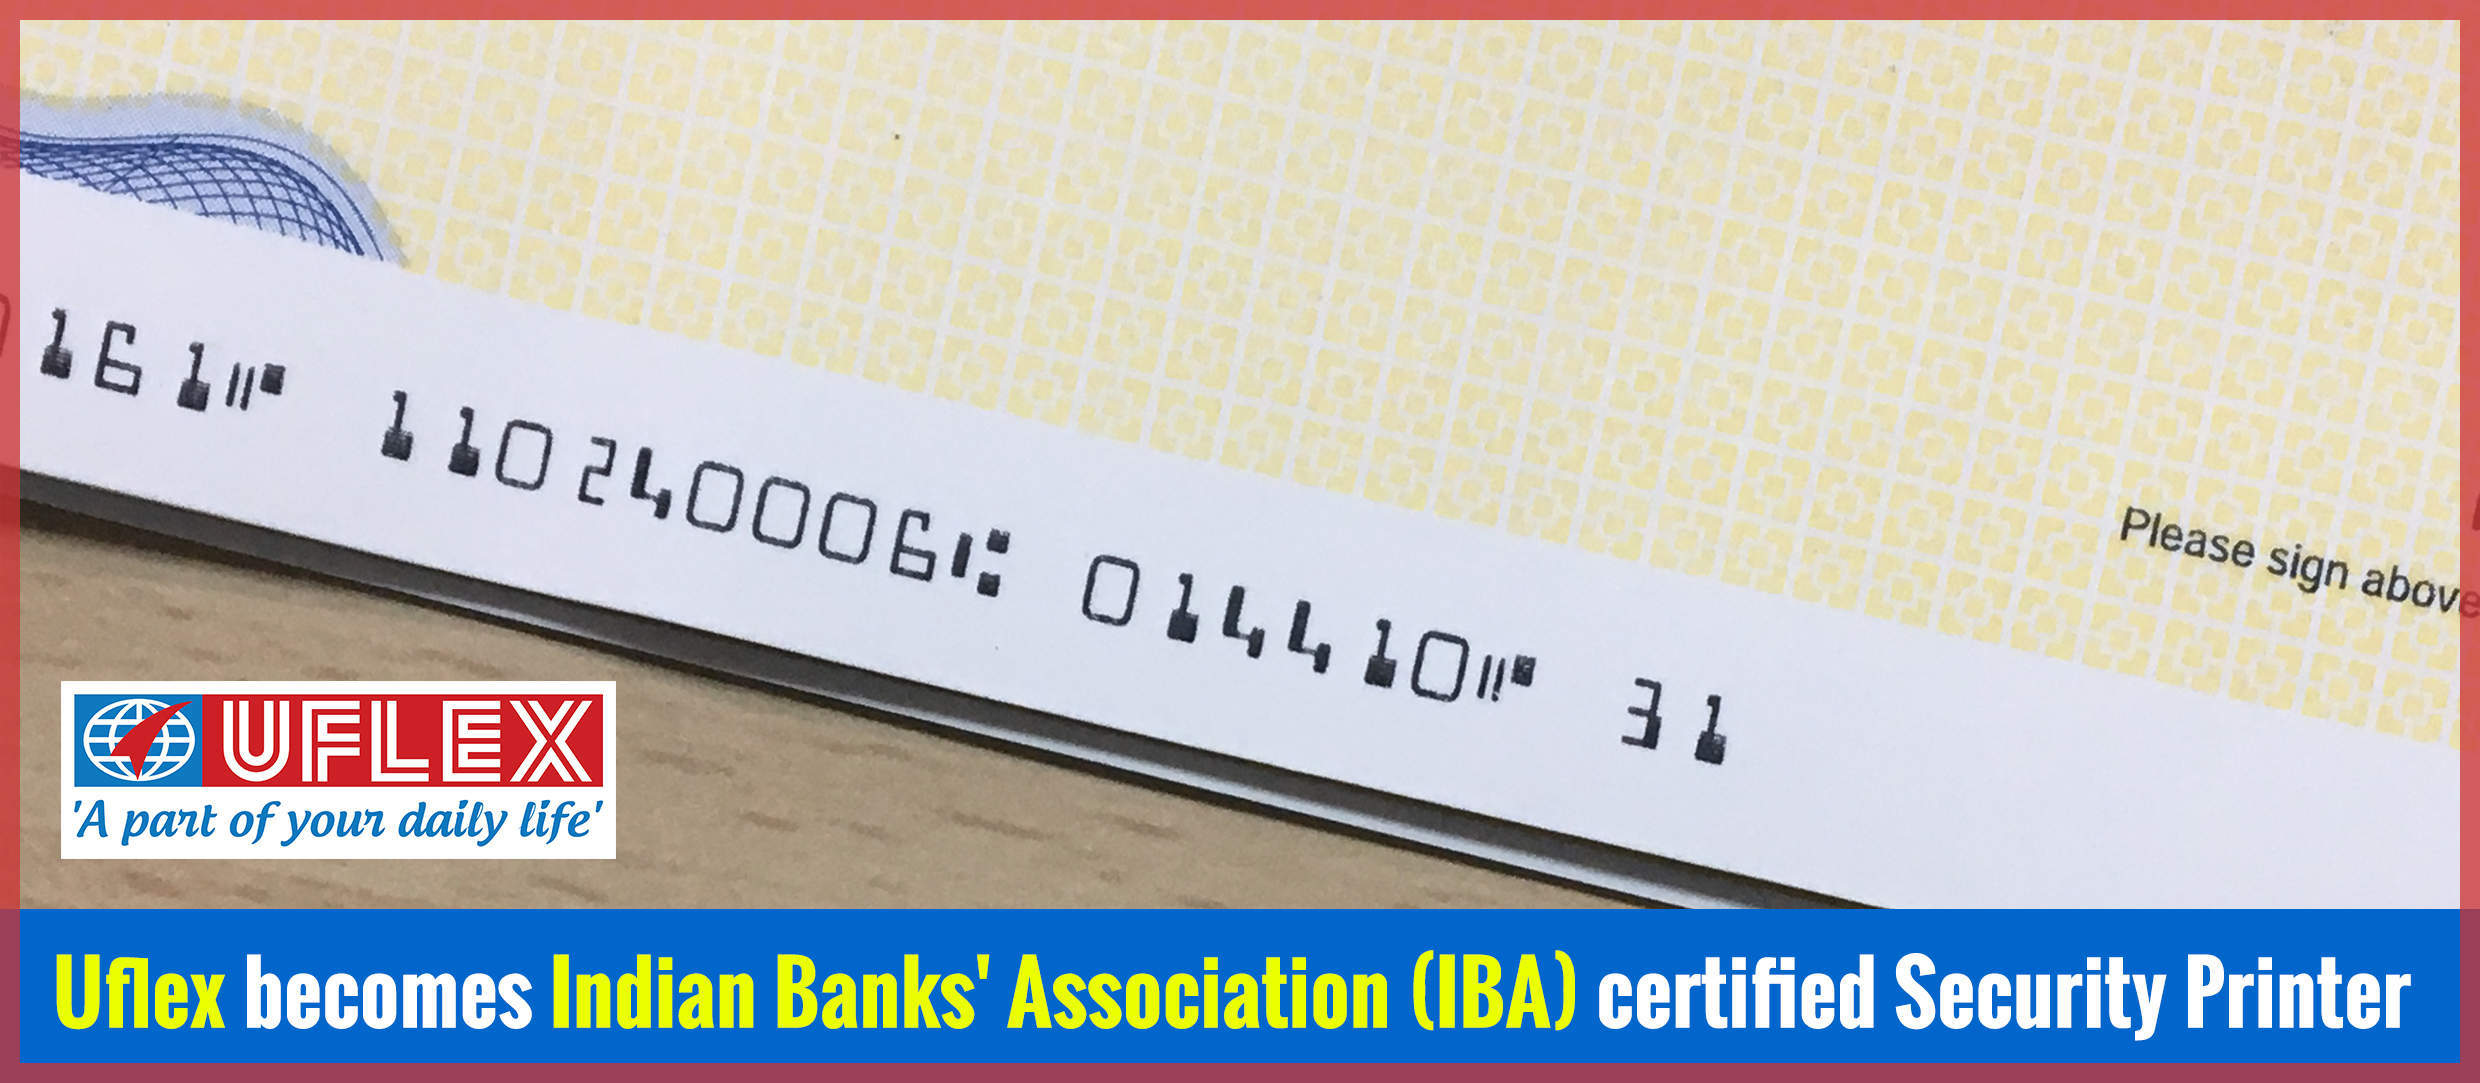 Uflex becomes Indian Banks’ Association (IBA) certified Security Printer